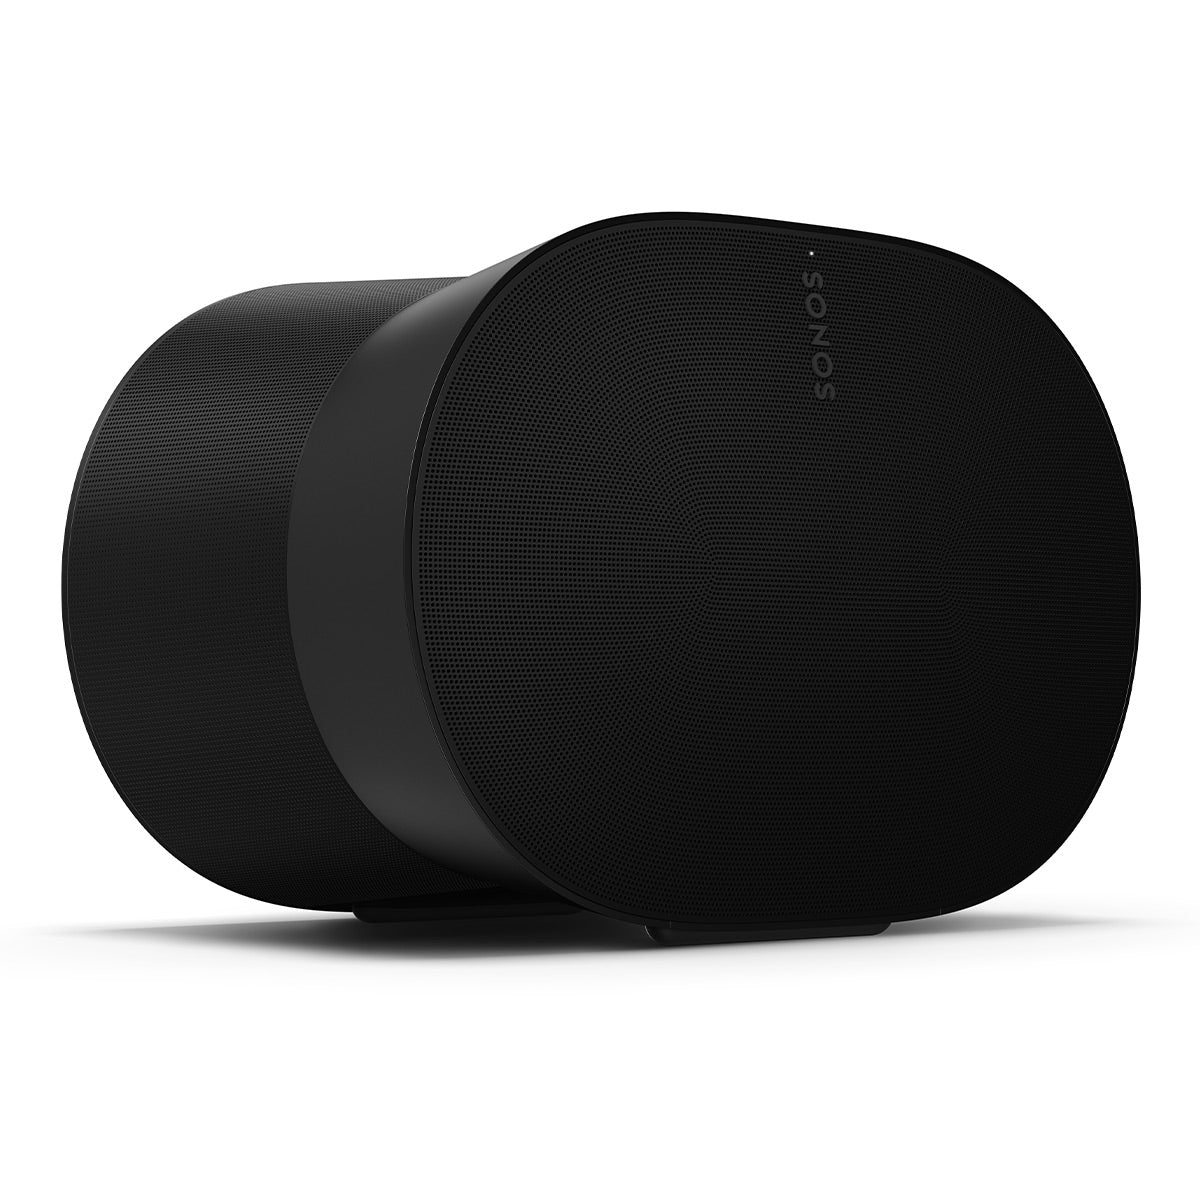 Sonos Roam SL Portable Wireless Speaker is Cheaper but Loses